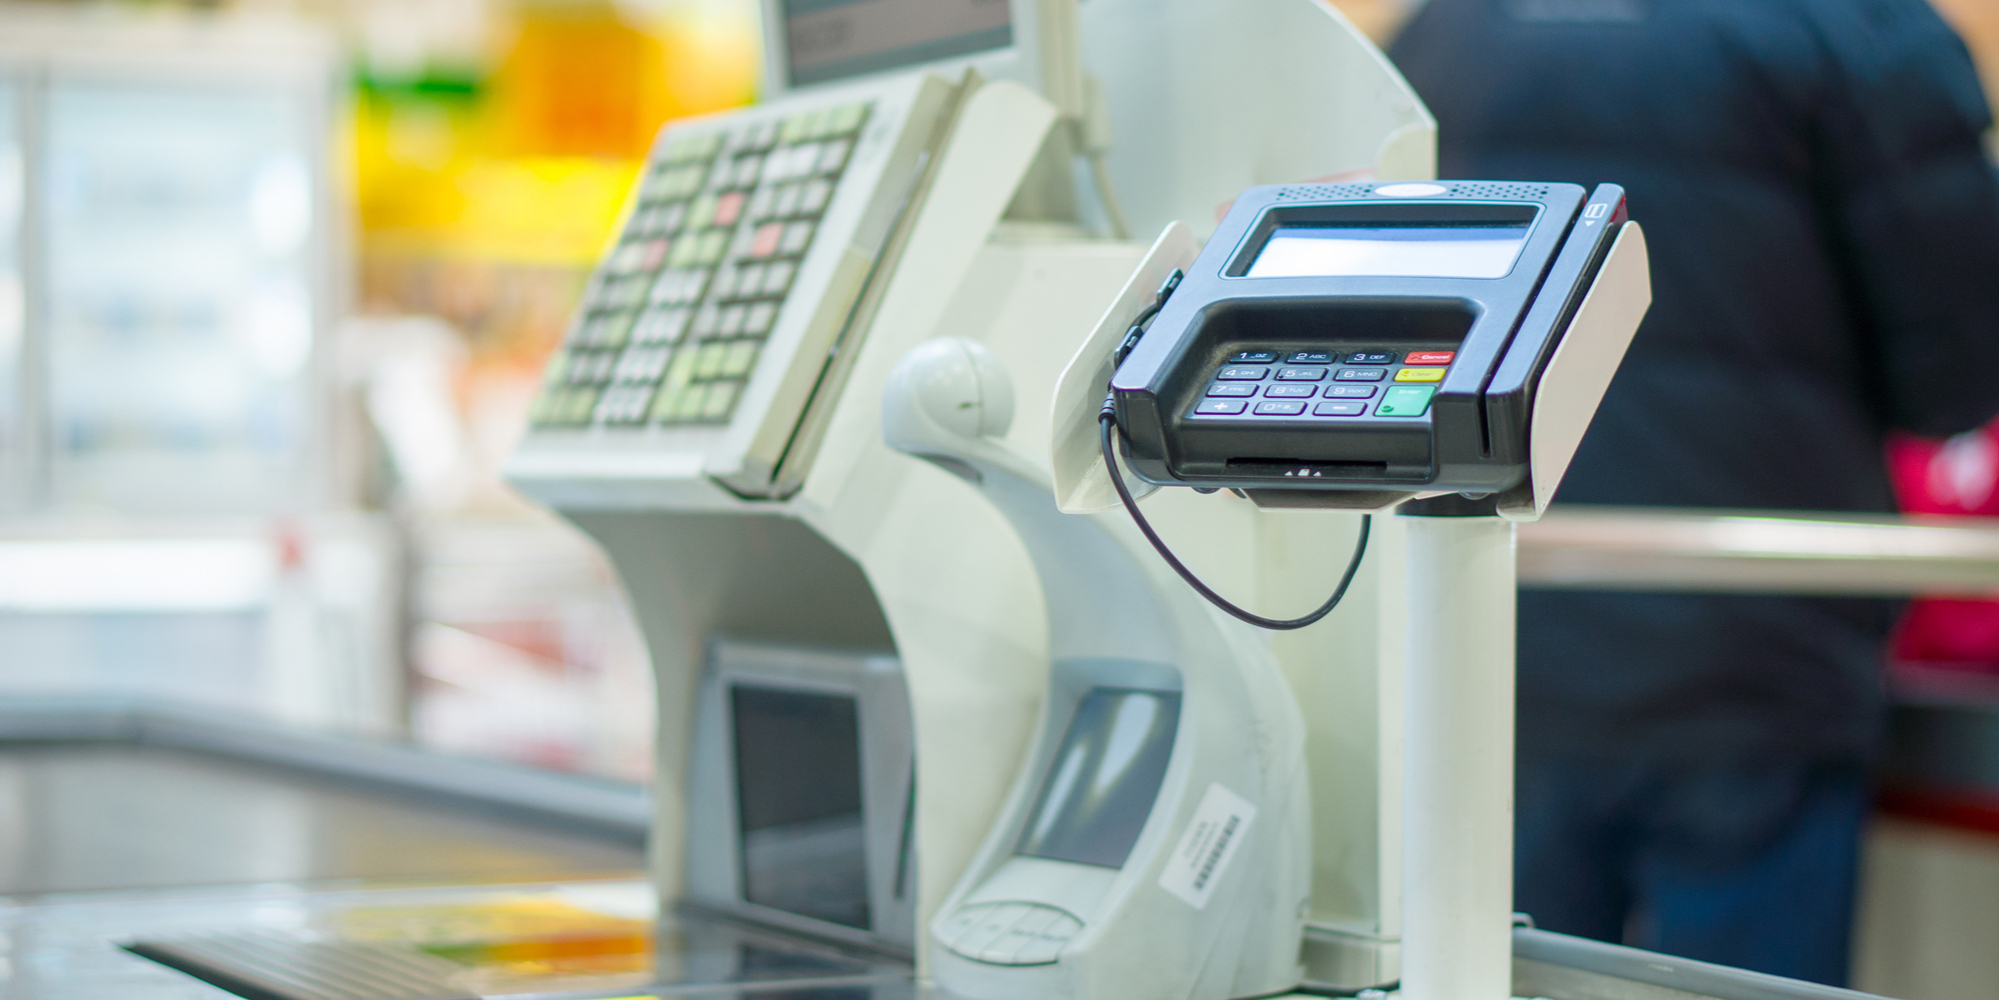 cash register technology